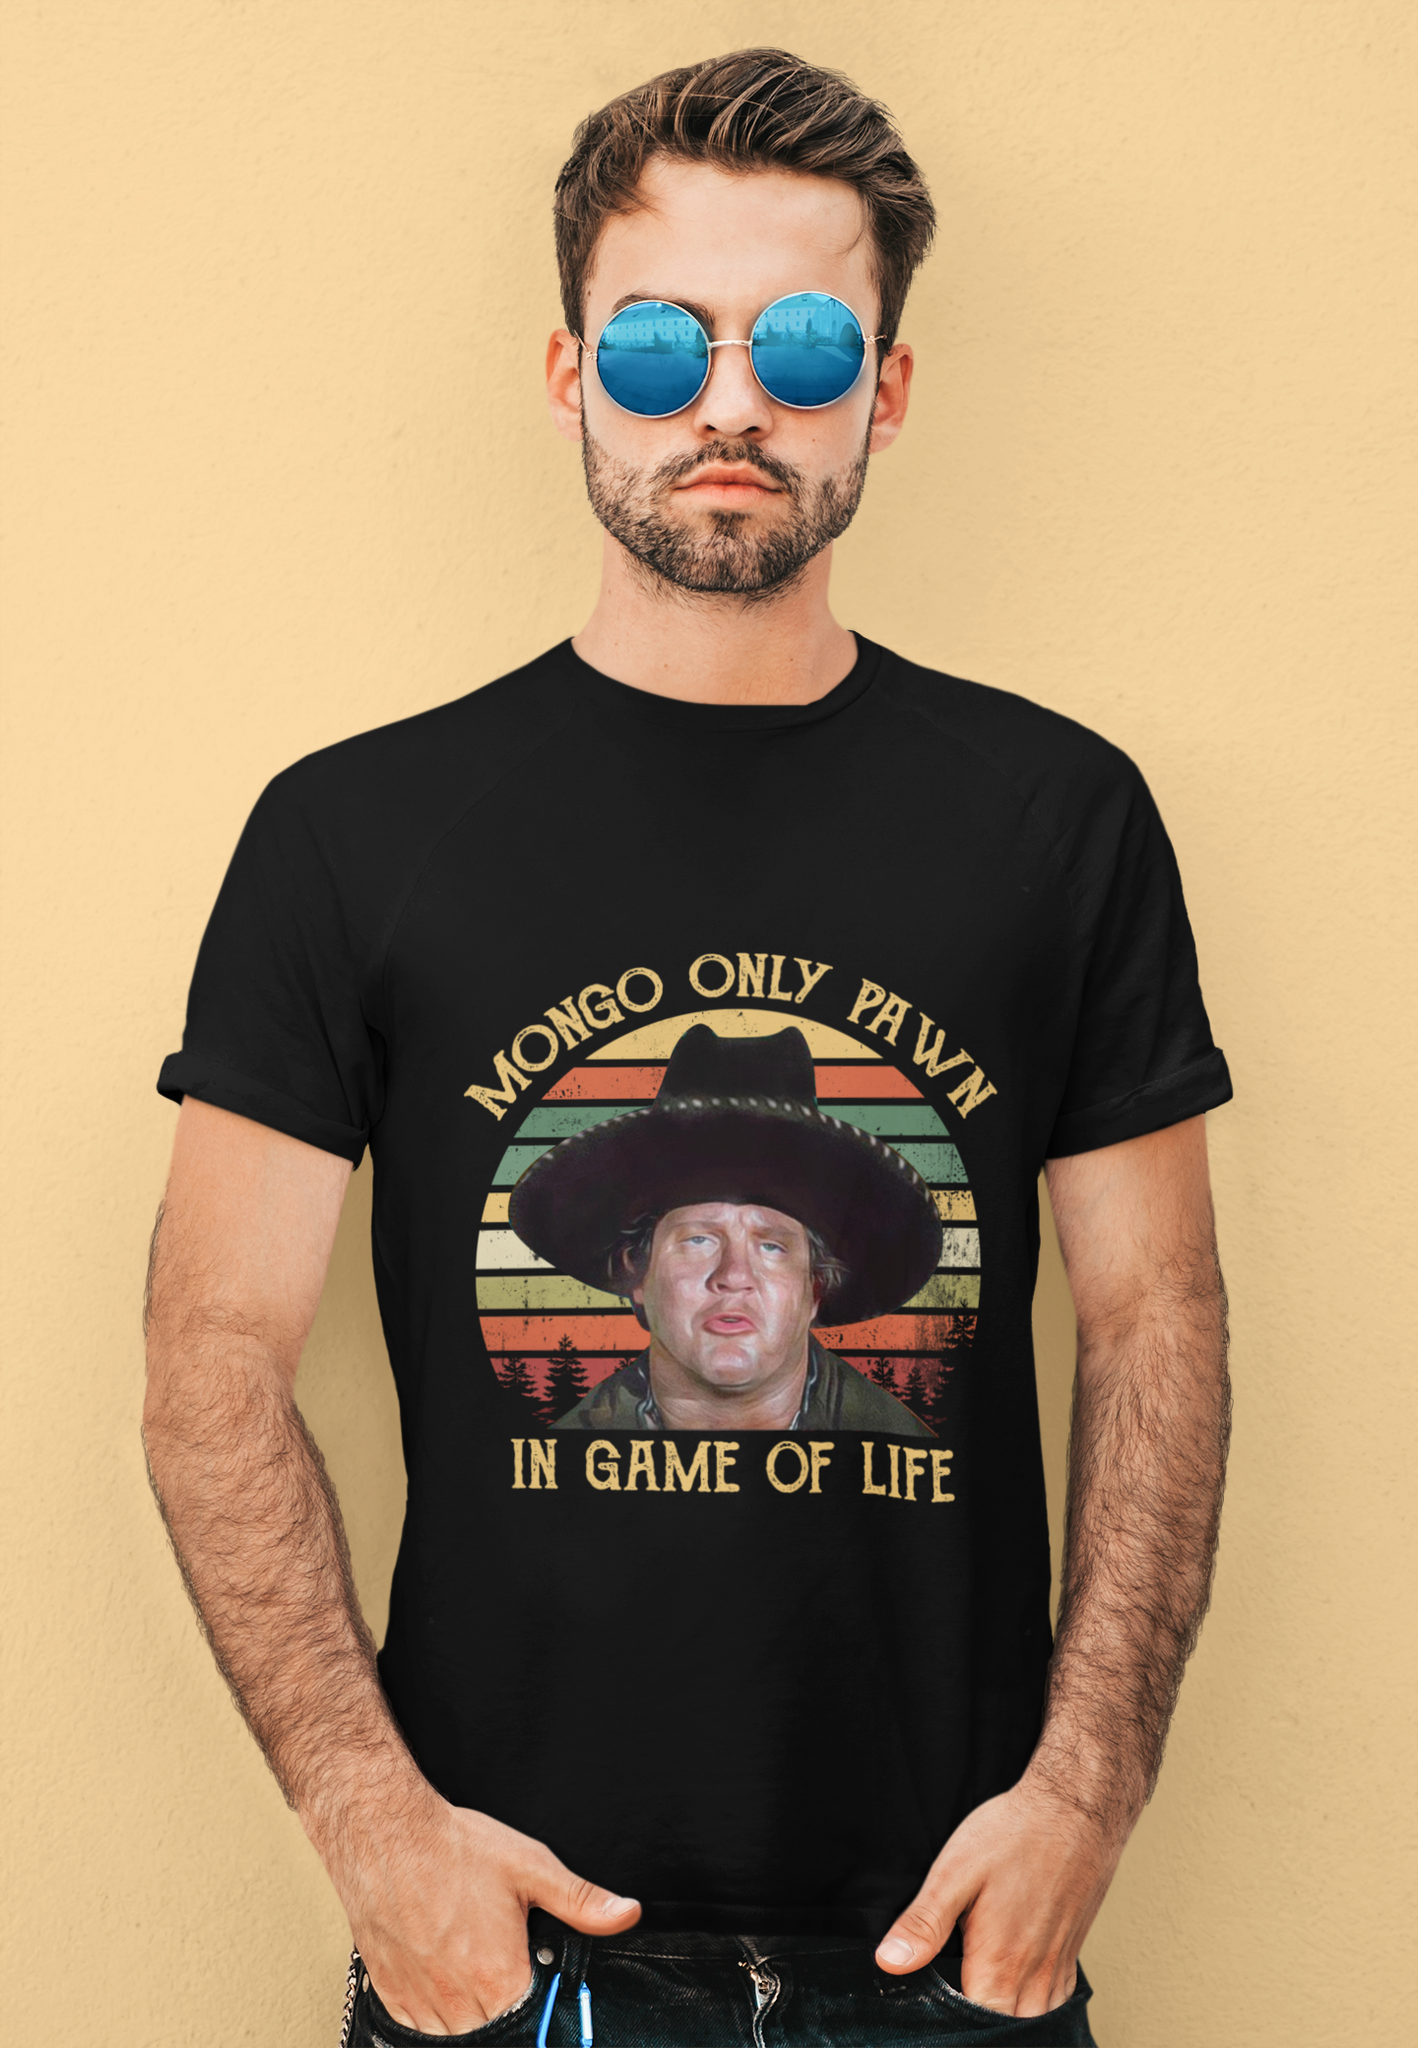 Blazing Saddles Movie T Shirt, Mongo T Shirt, Mongo Only Pawn In Game Of Life Tshirt